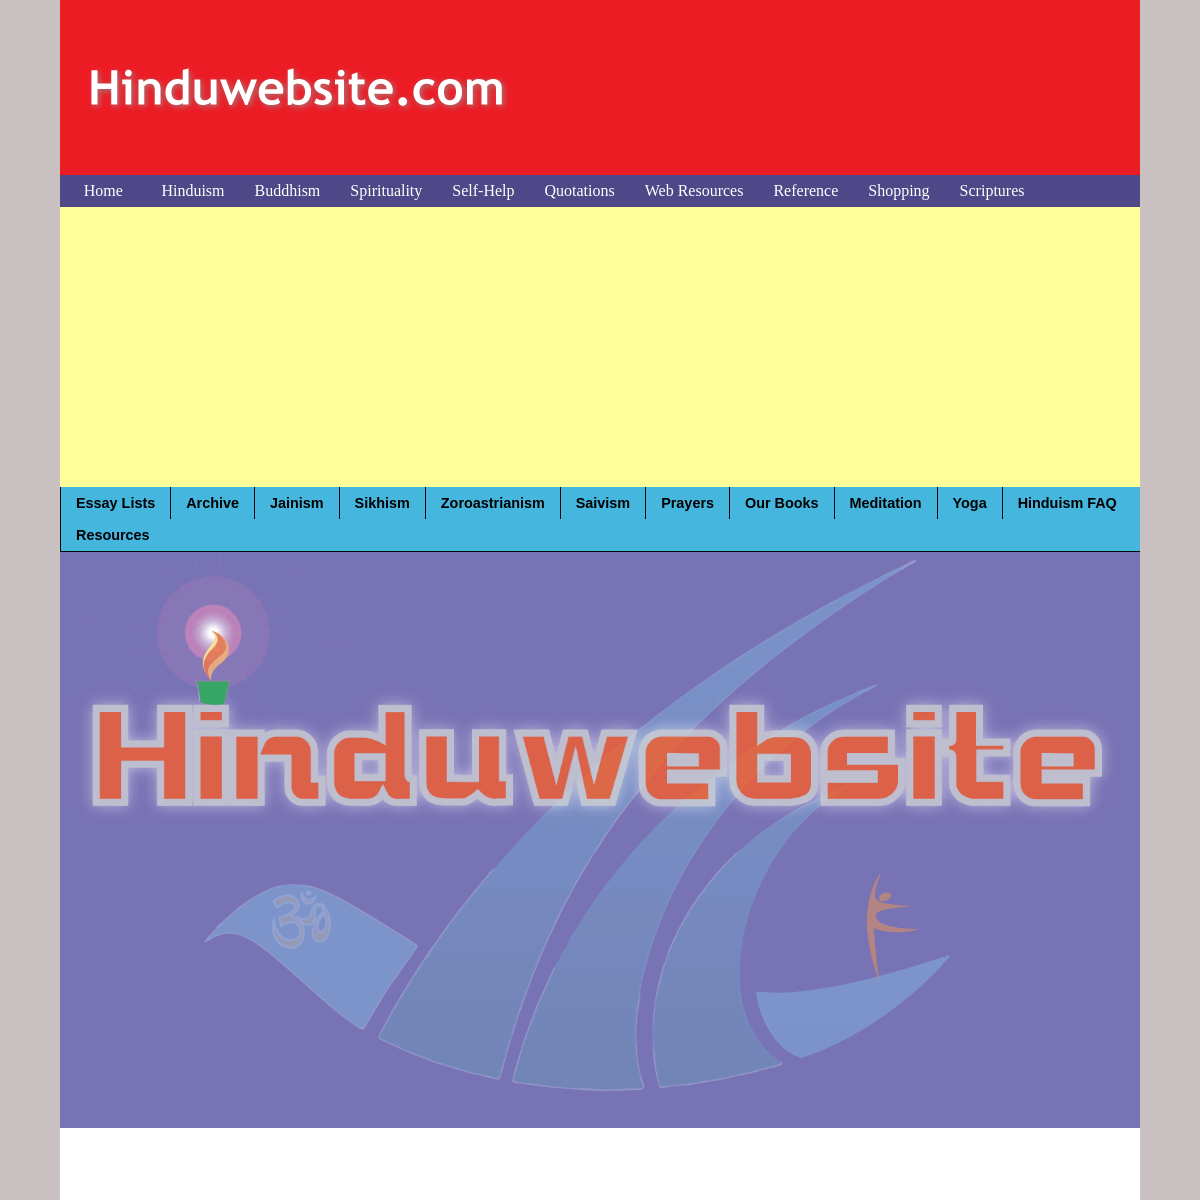 A complete backup of hinduwebsite.com